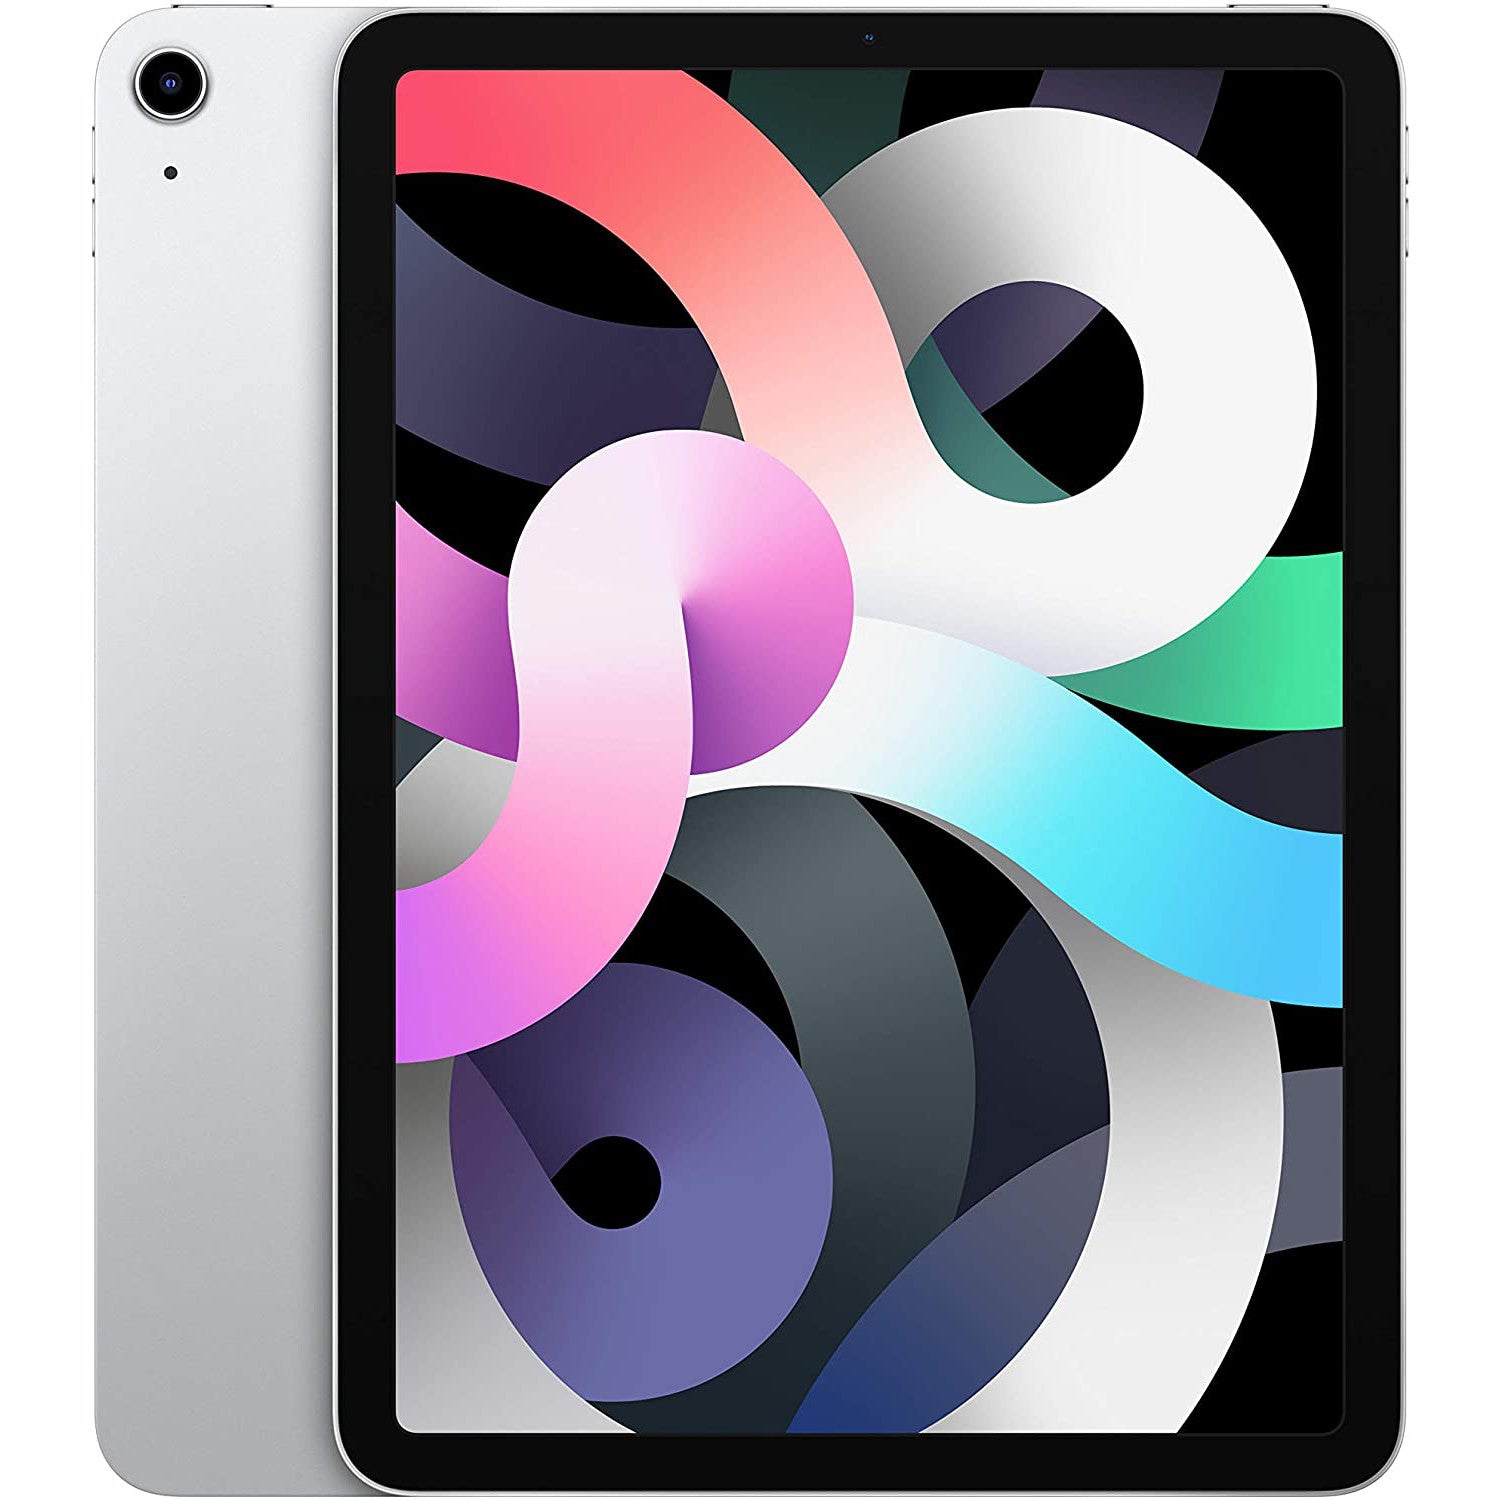 iPad Air 4 64GB WiFi & Cellular - Silber - Gut